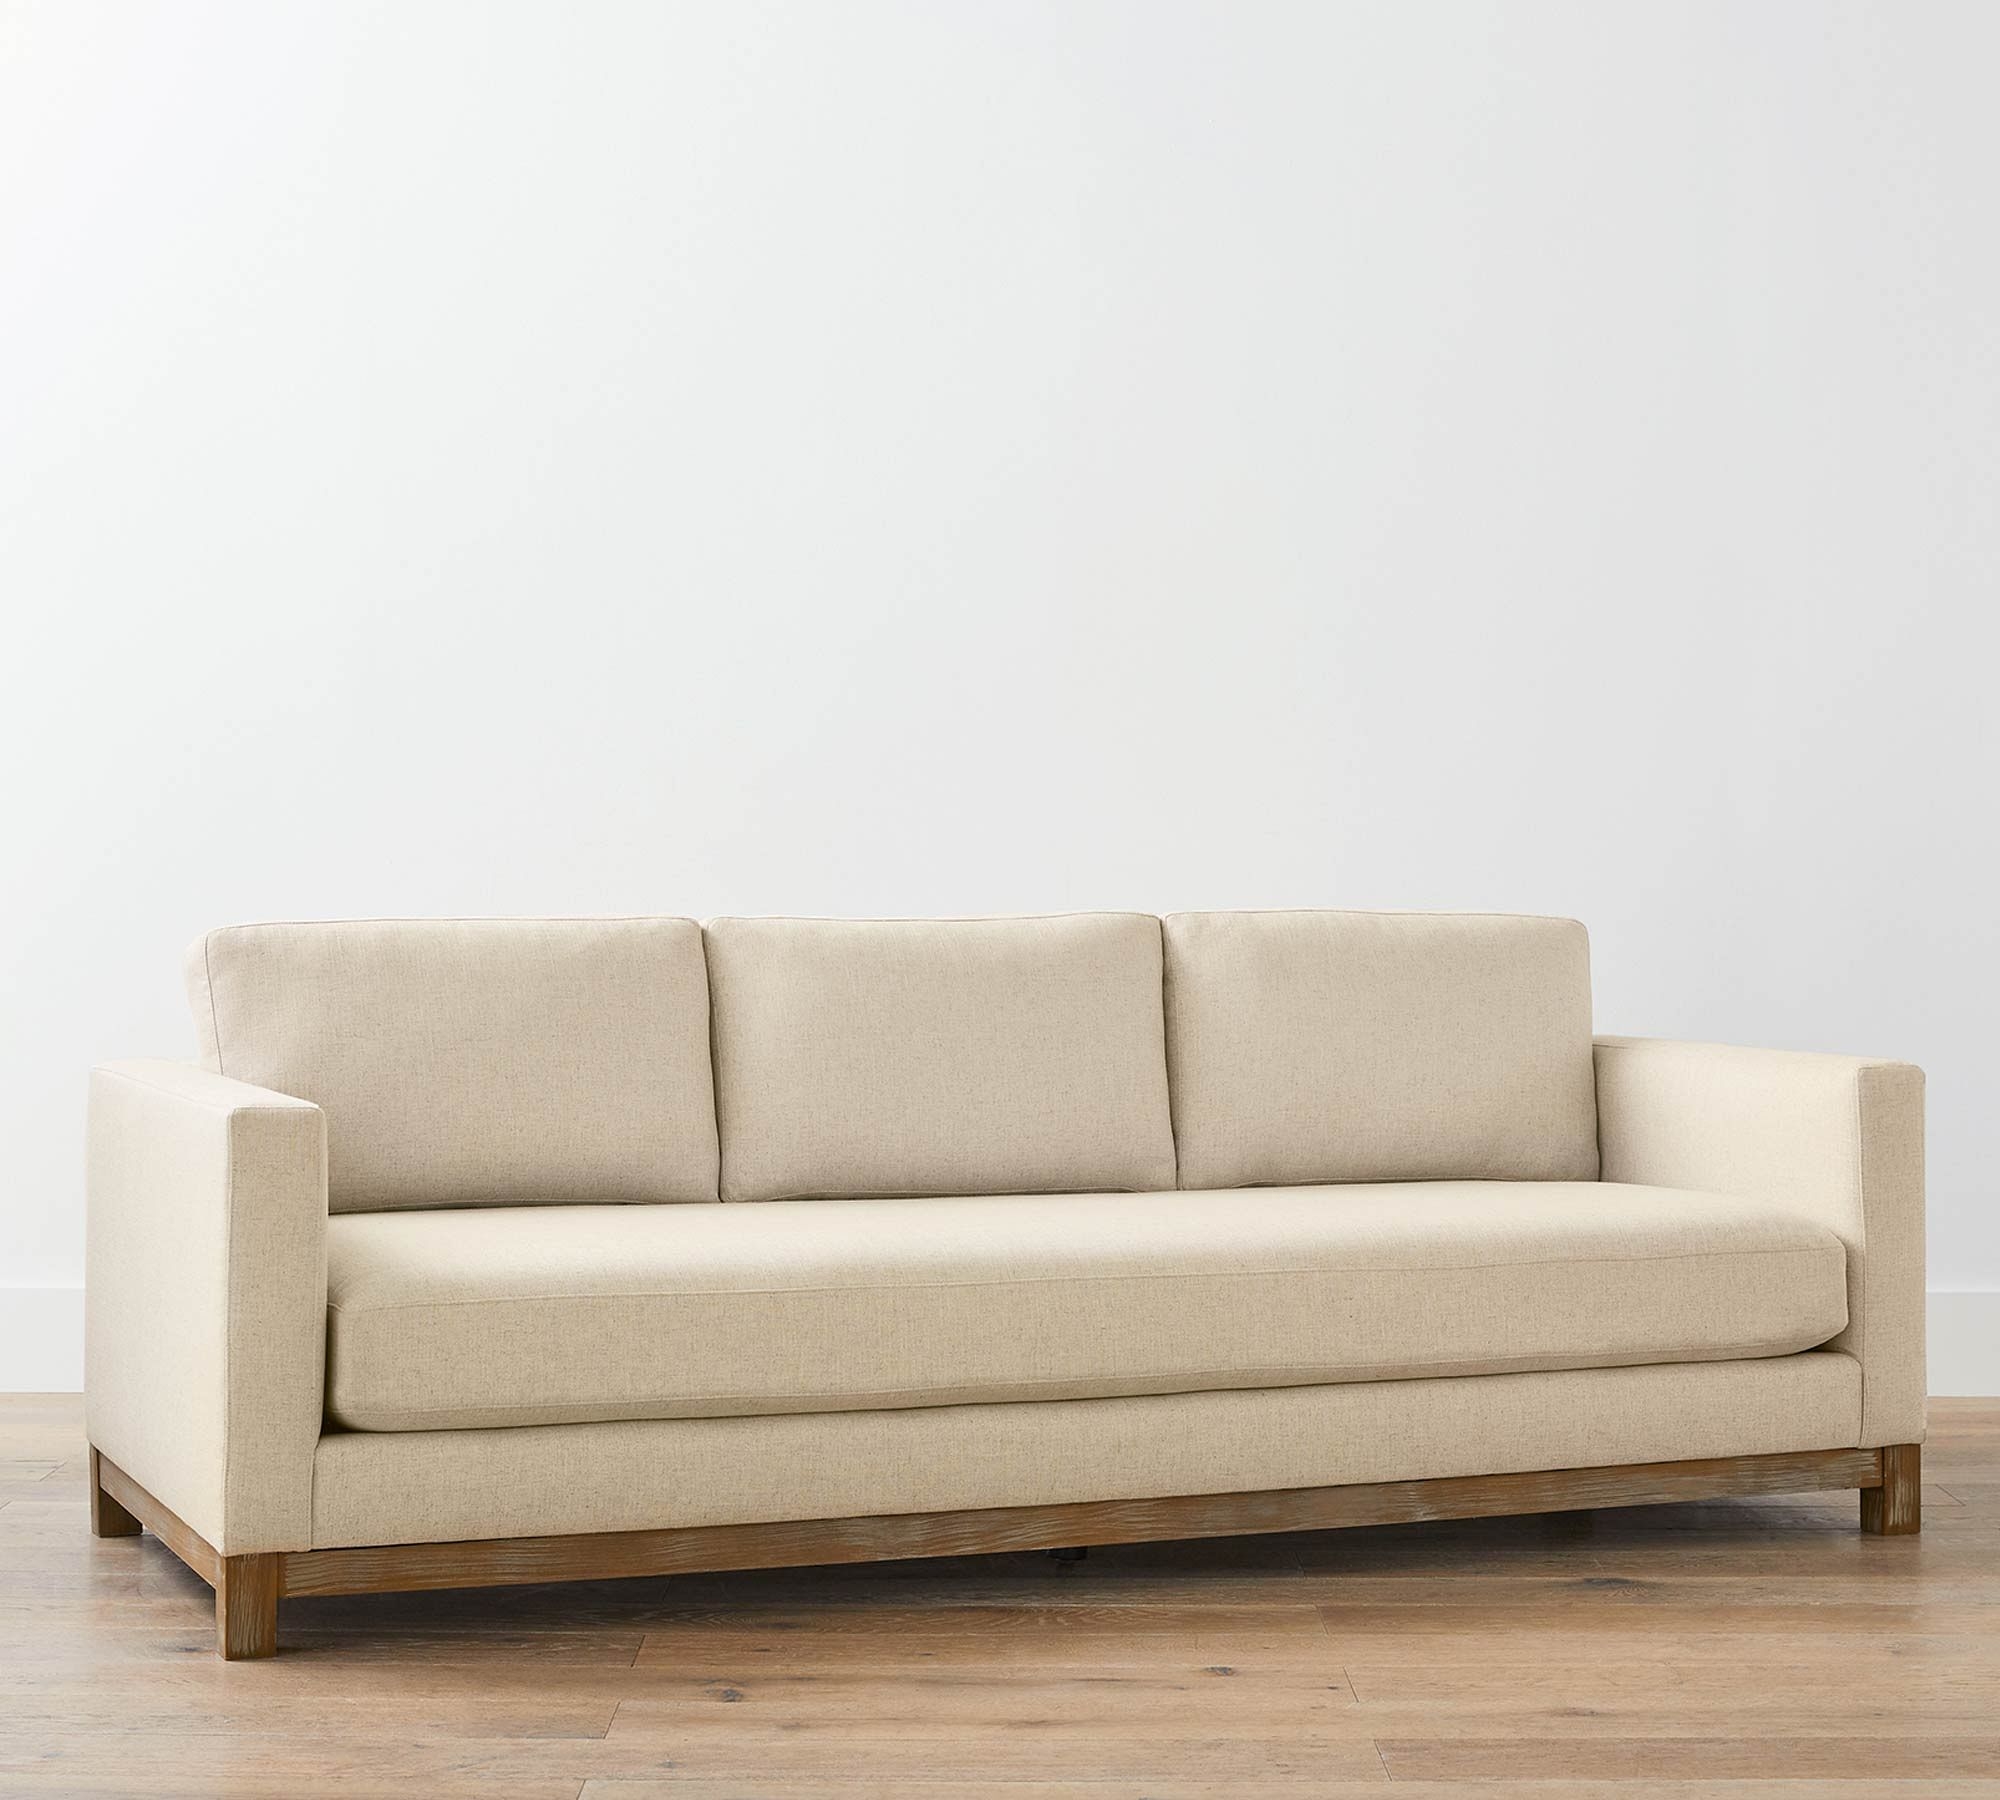 Jake Upholstered Sofa 3x1 86" with Wood Base, Standard Cushions, Premium Performance Basketweave Ivory - Image 2